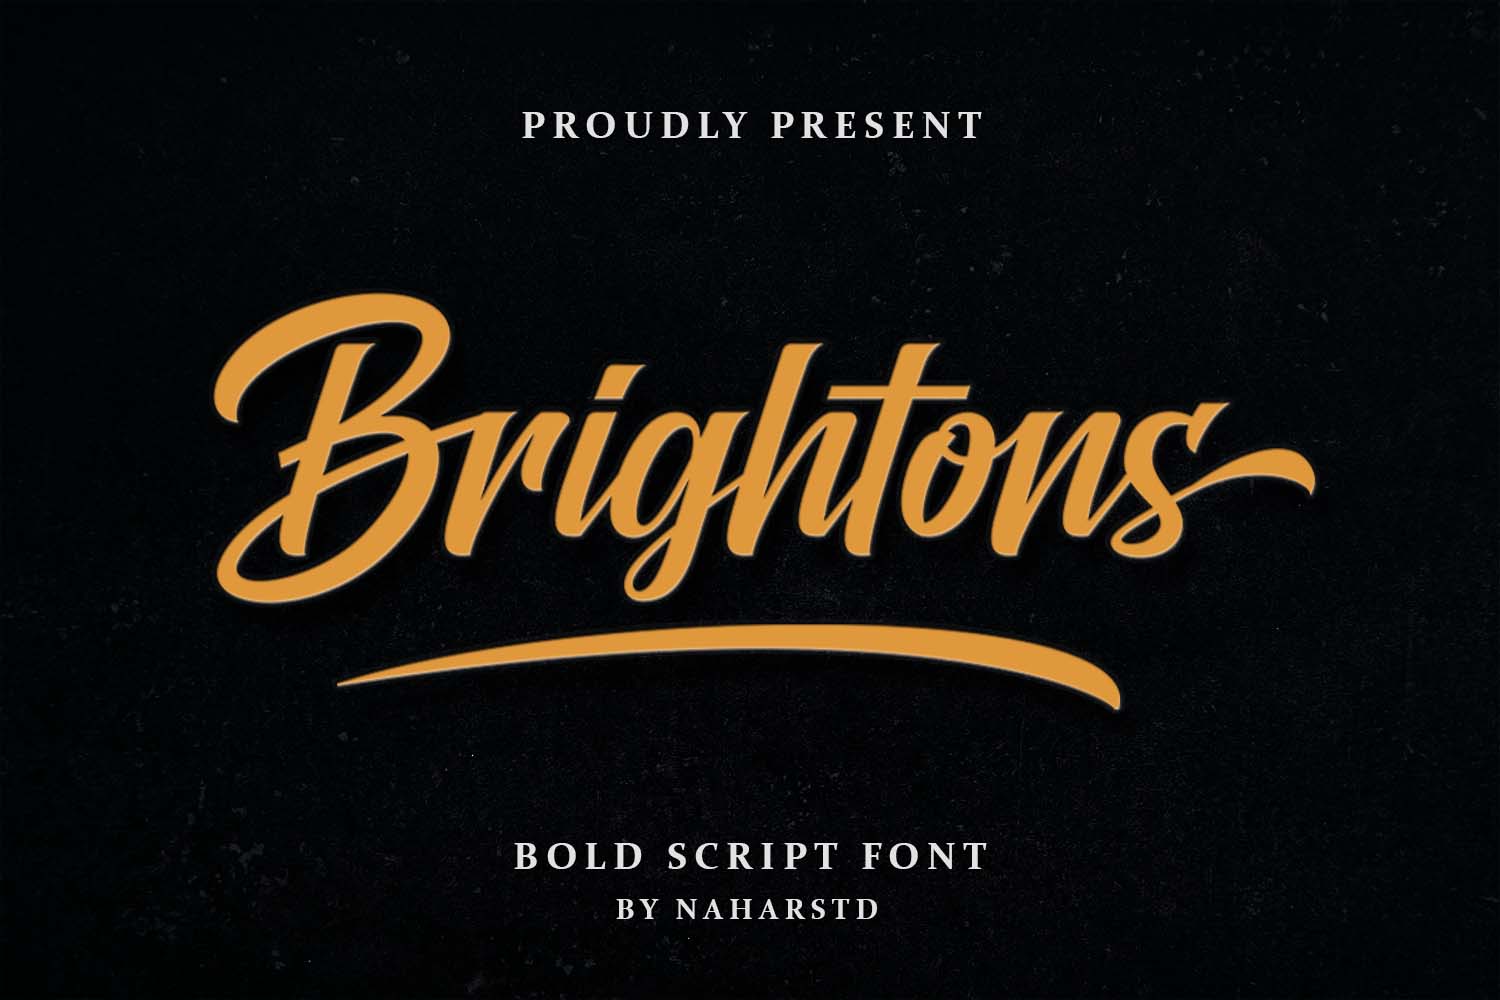 Brightons Free Font